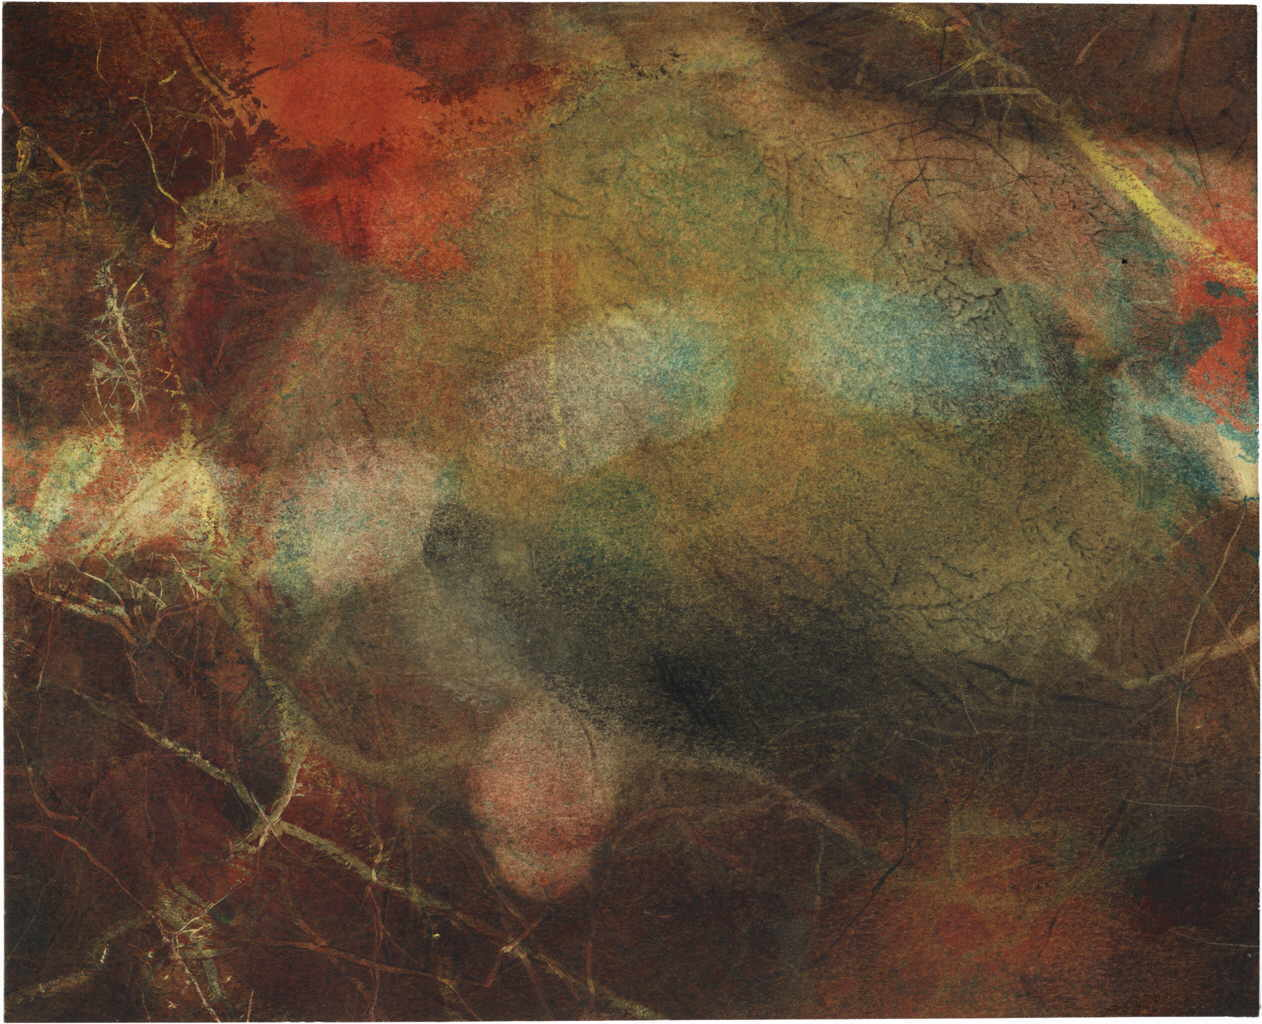 Warner Isabel 
untitled, 2001
mixed media / paper mounted on acid free cardboard
17 x 22 cm